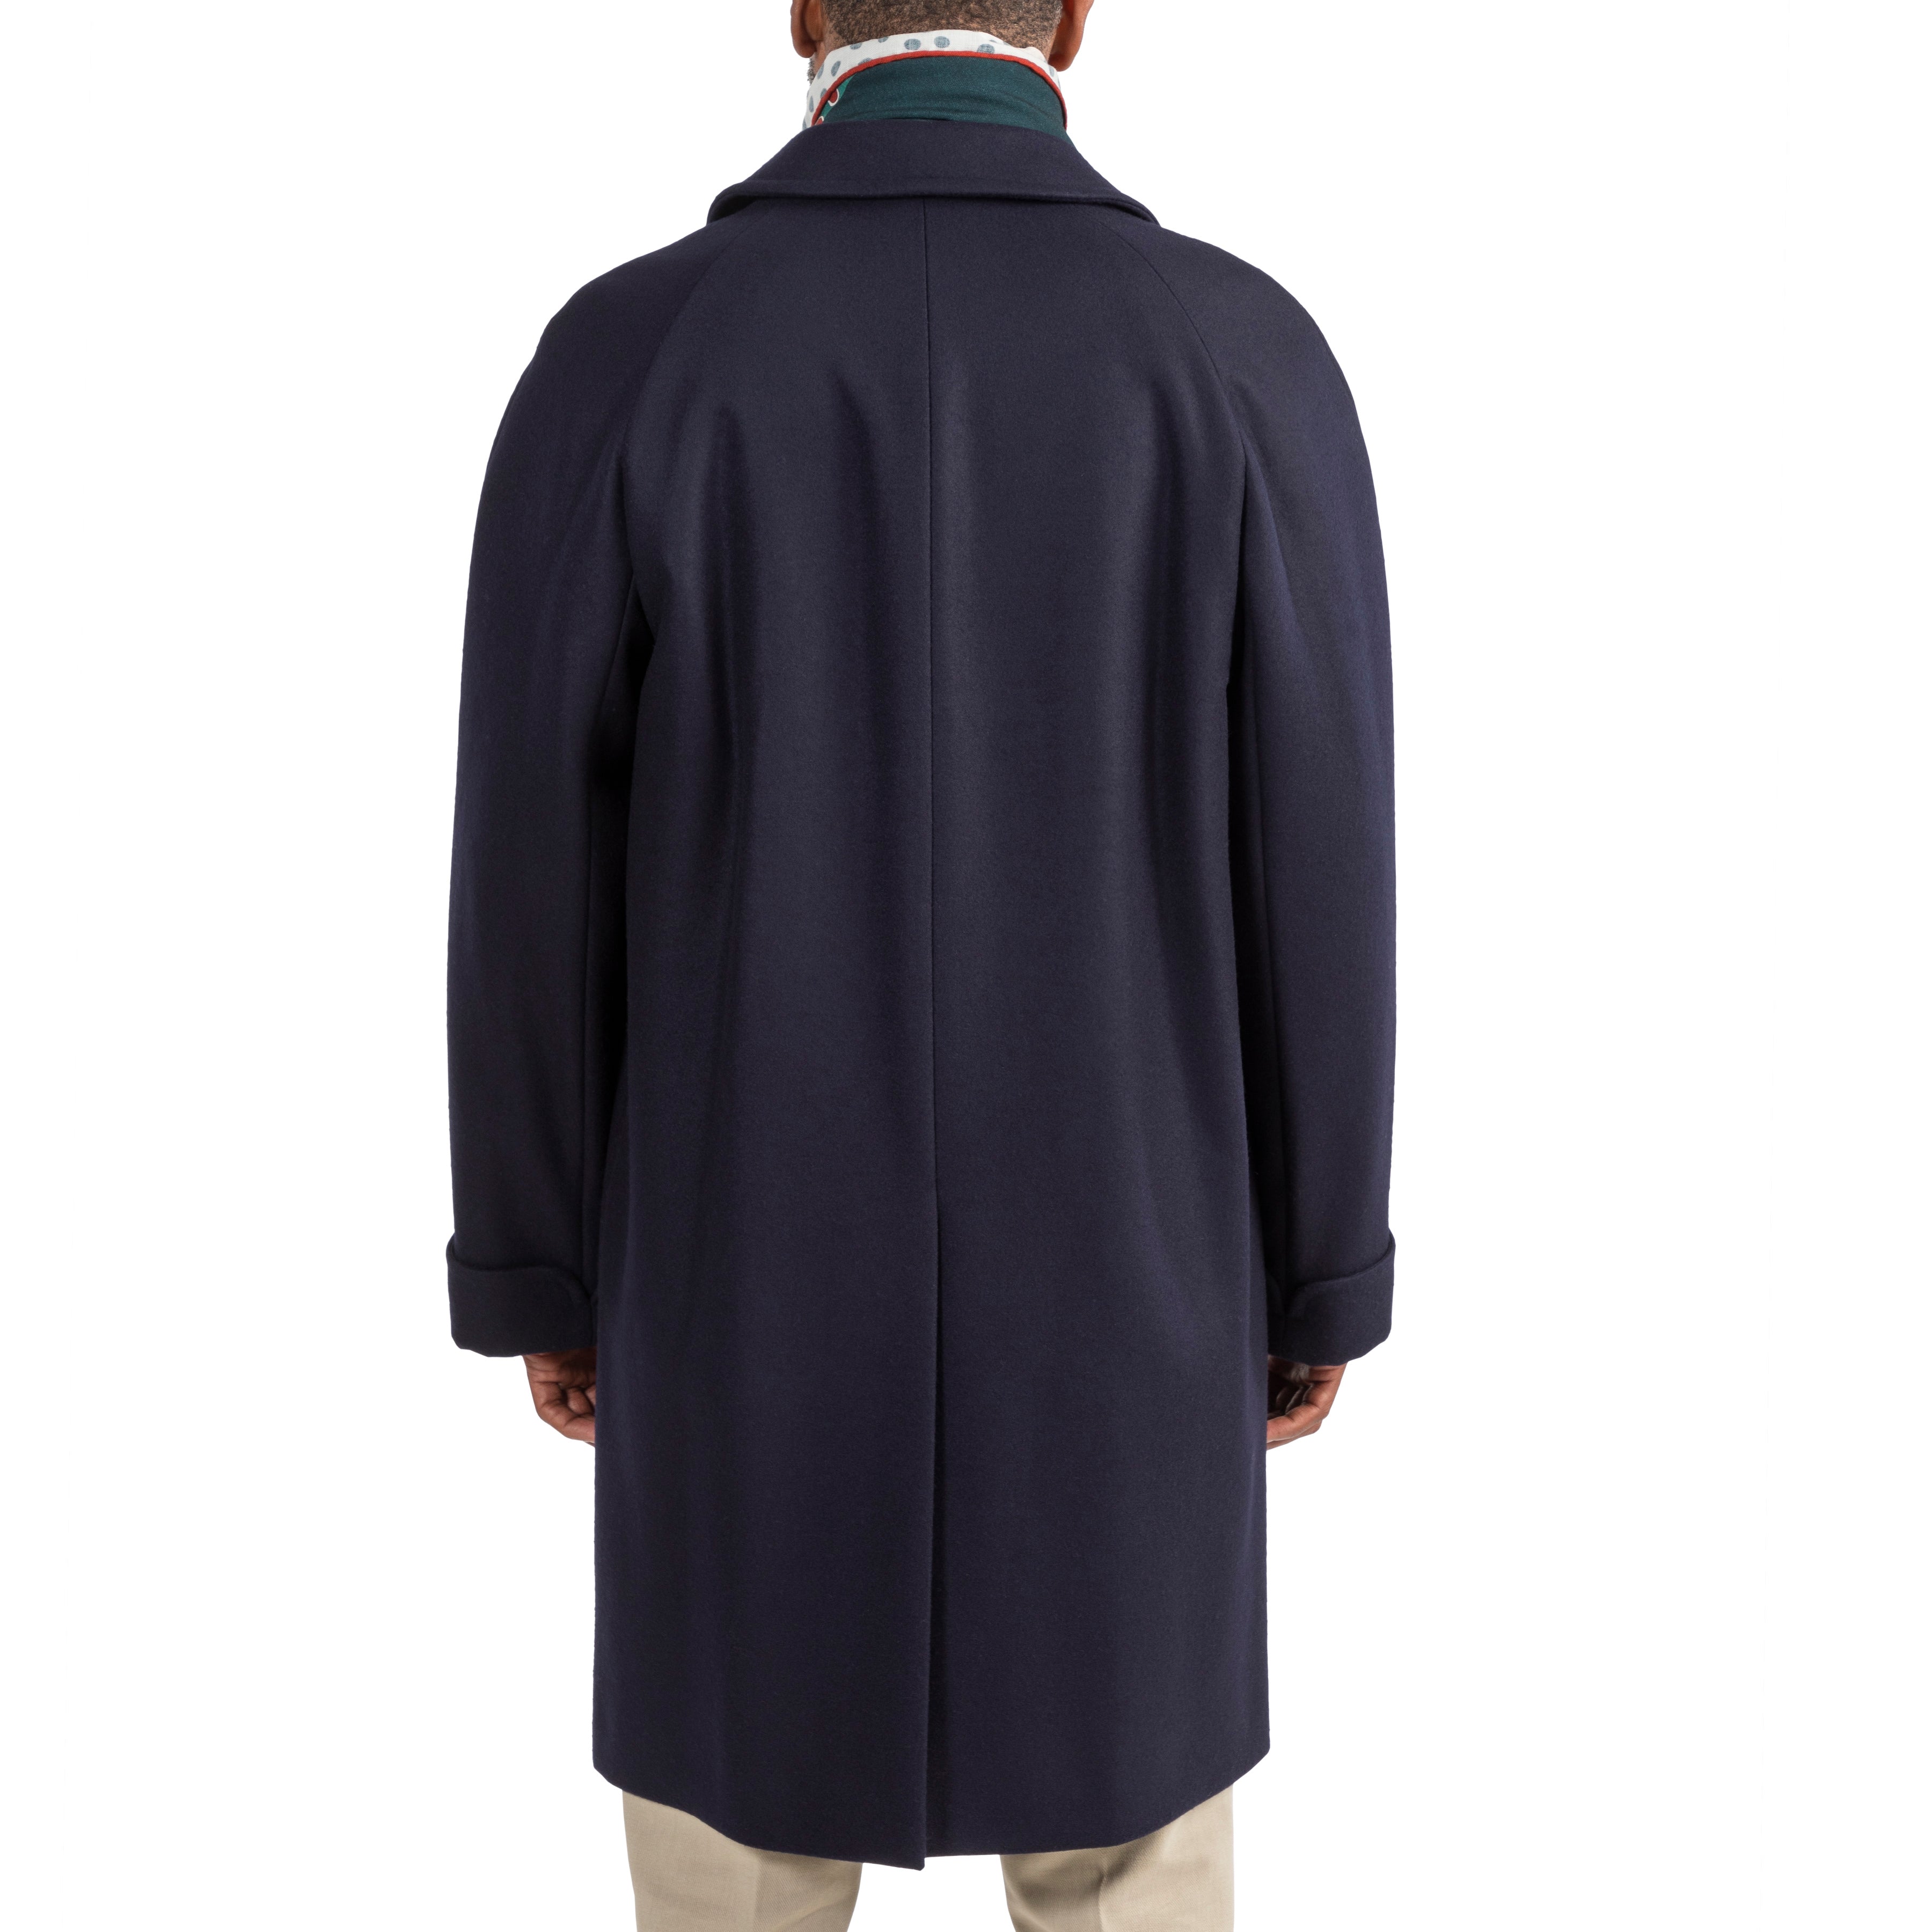 Corb Wool/Cashmere Melton Jersey Coat